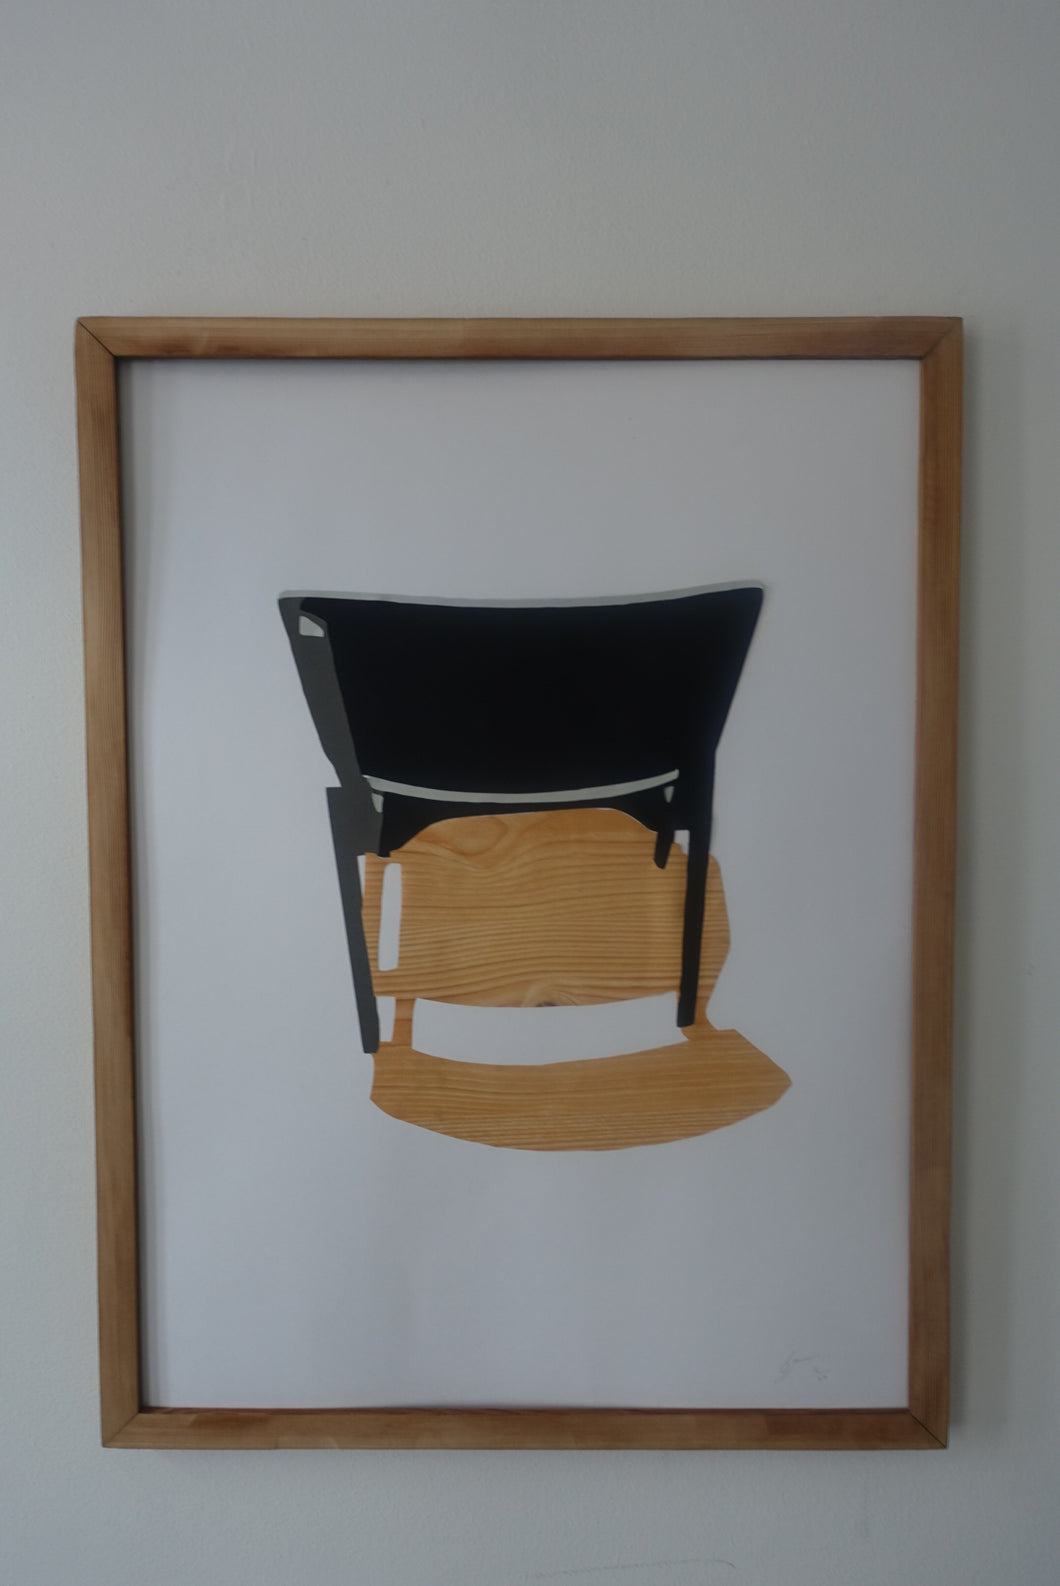 Nid cadair bren yw hon (mewn ffram) / This is not a wooden chair (framed)